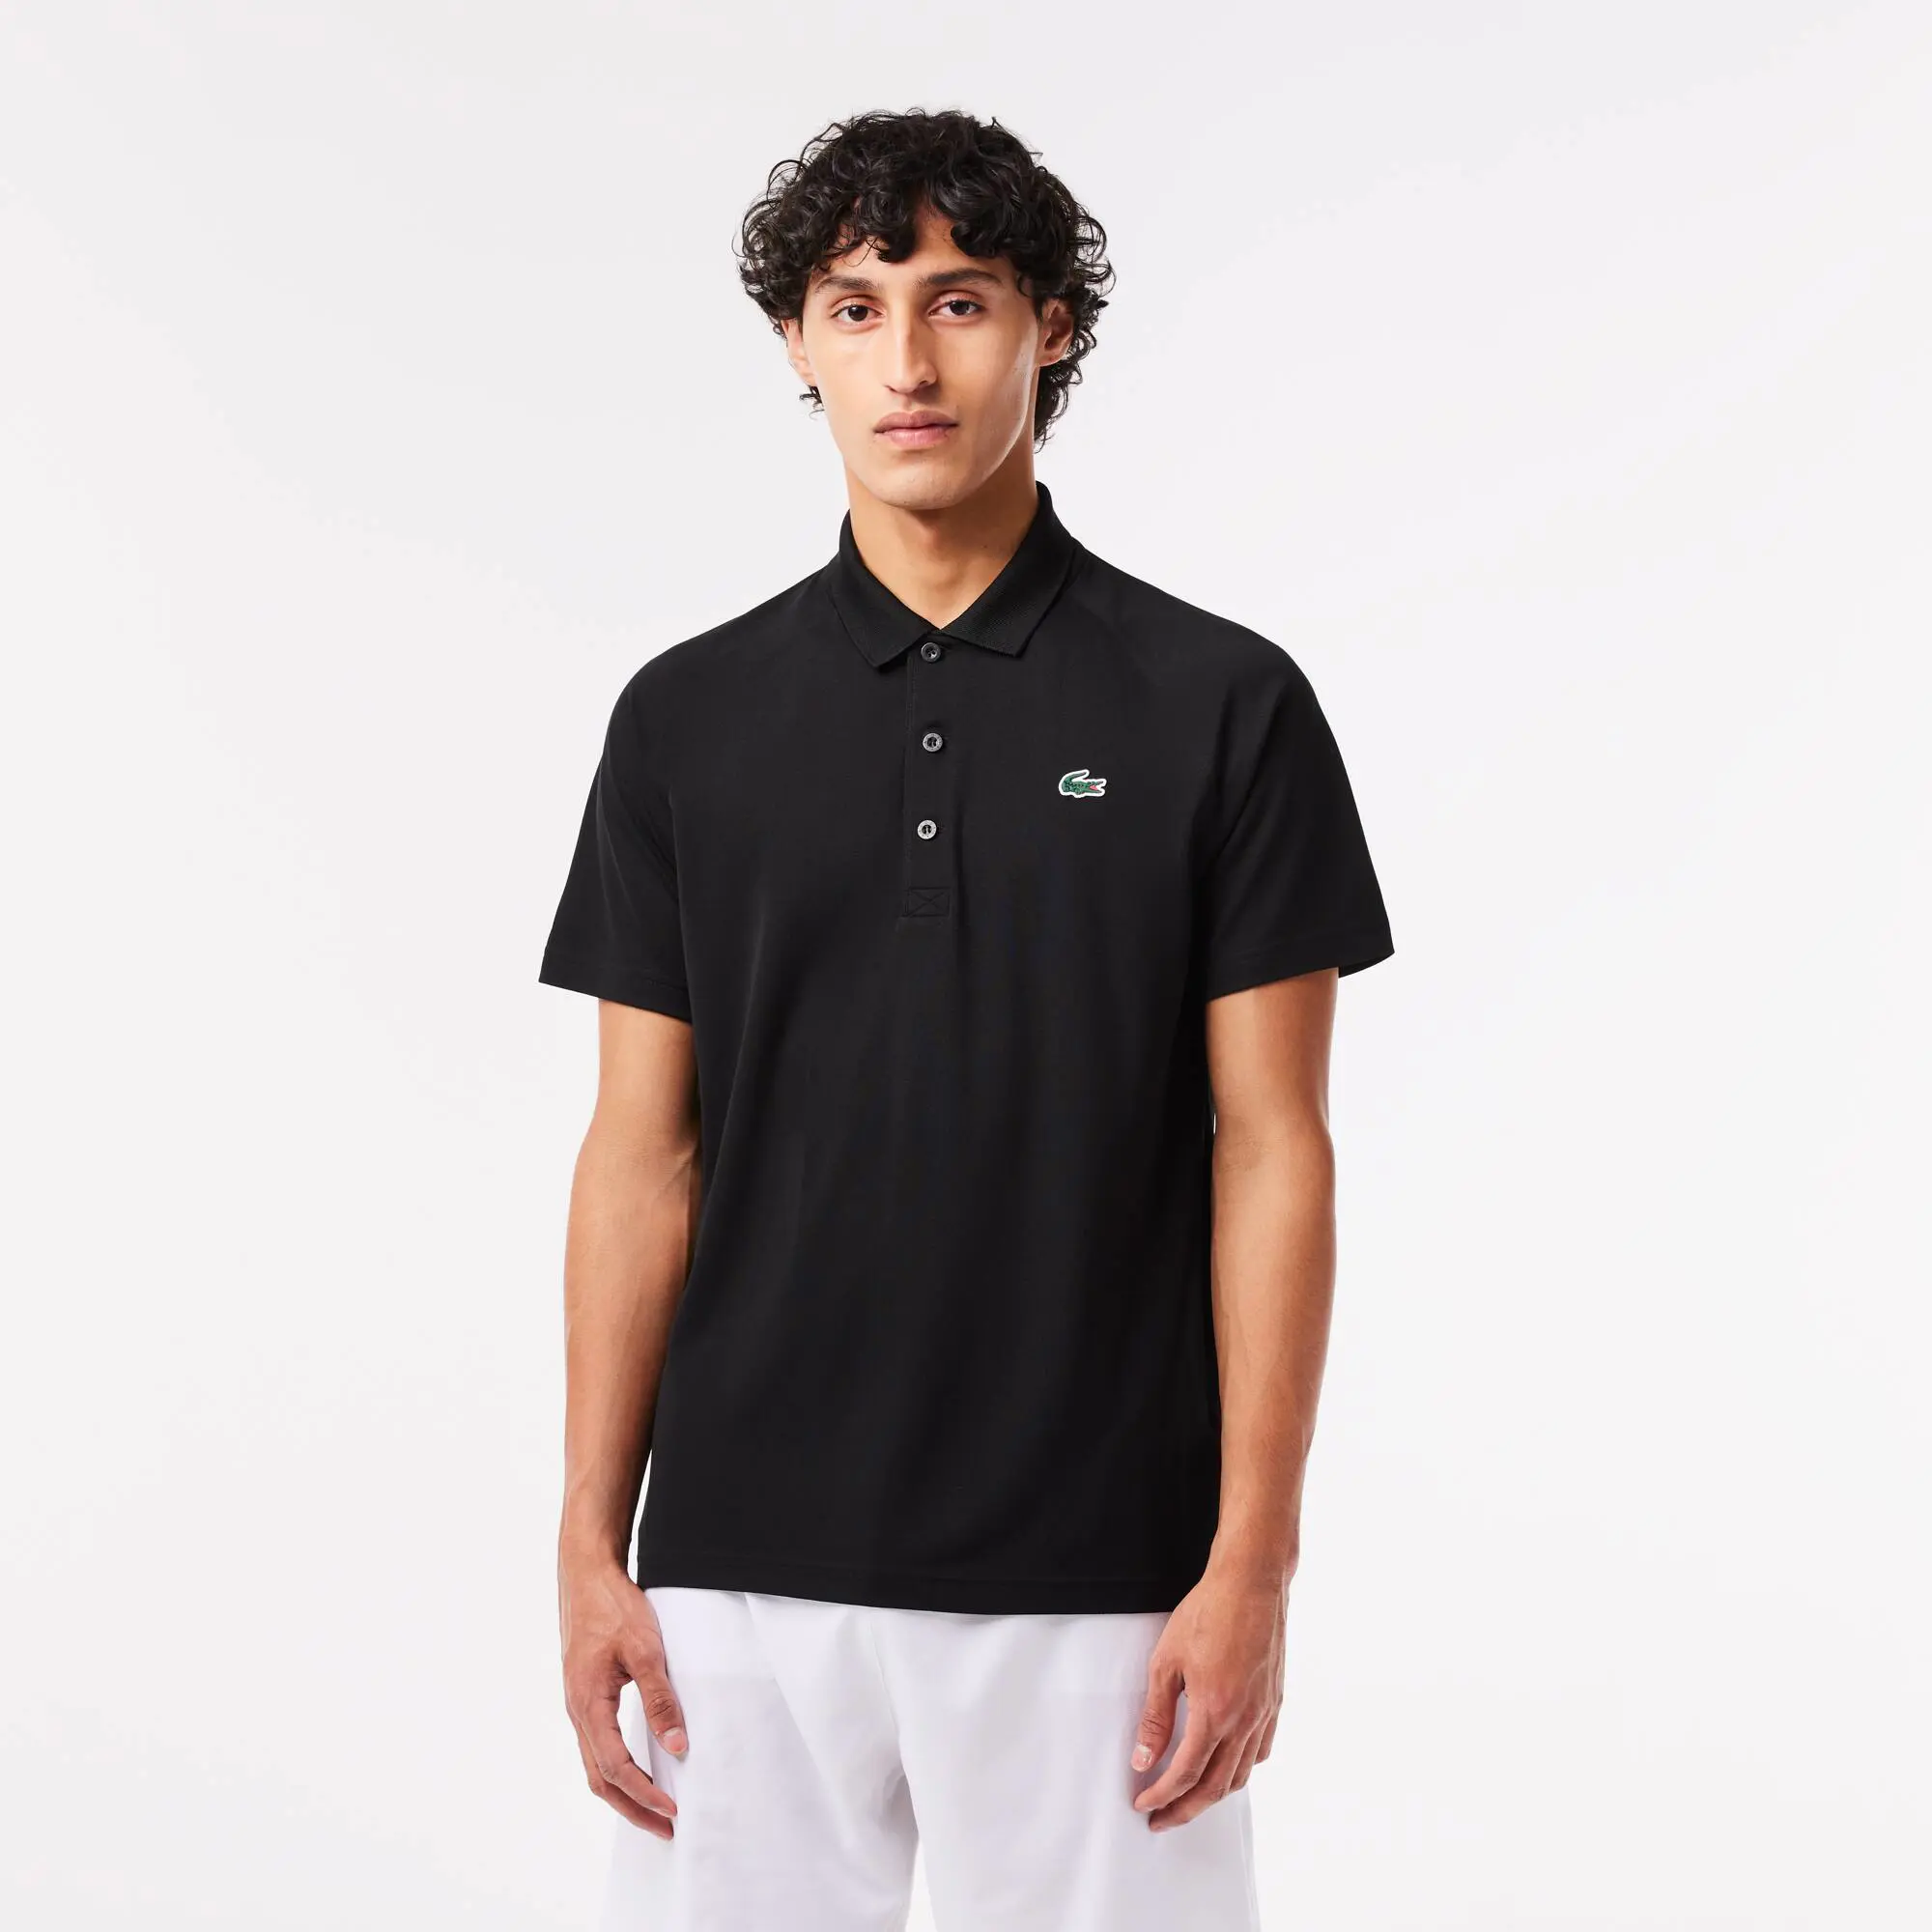 Lacoste Men's Lacoste SPORT Breathable Run-Resistant Interlock Polo Shirt. 1